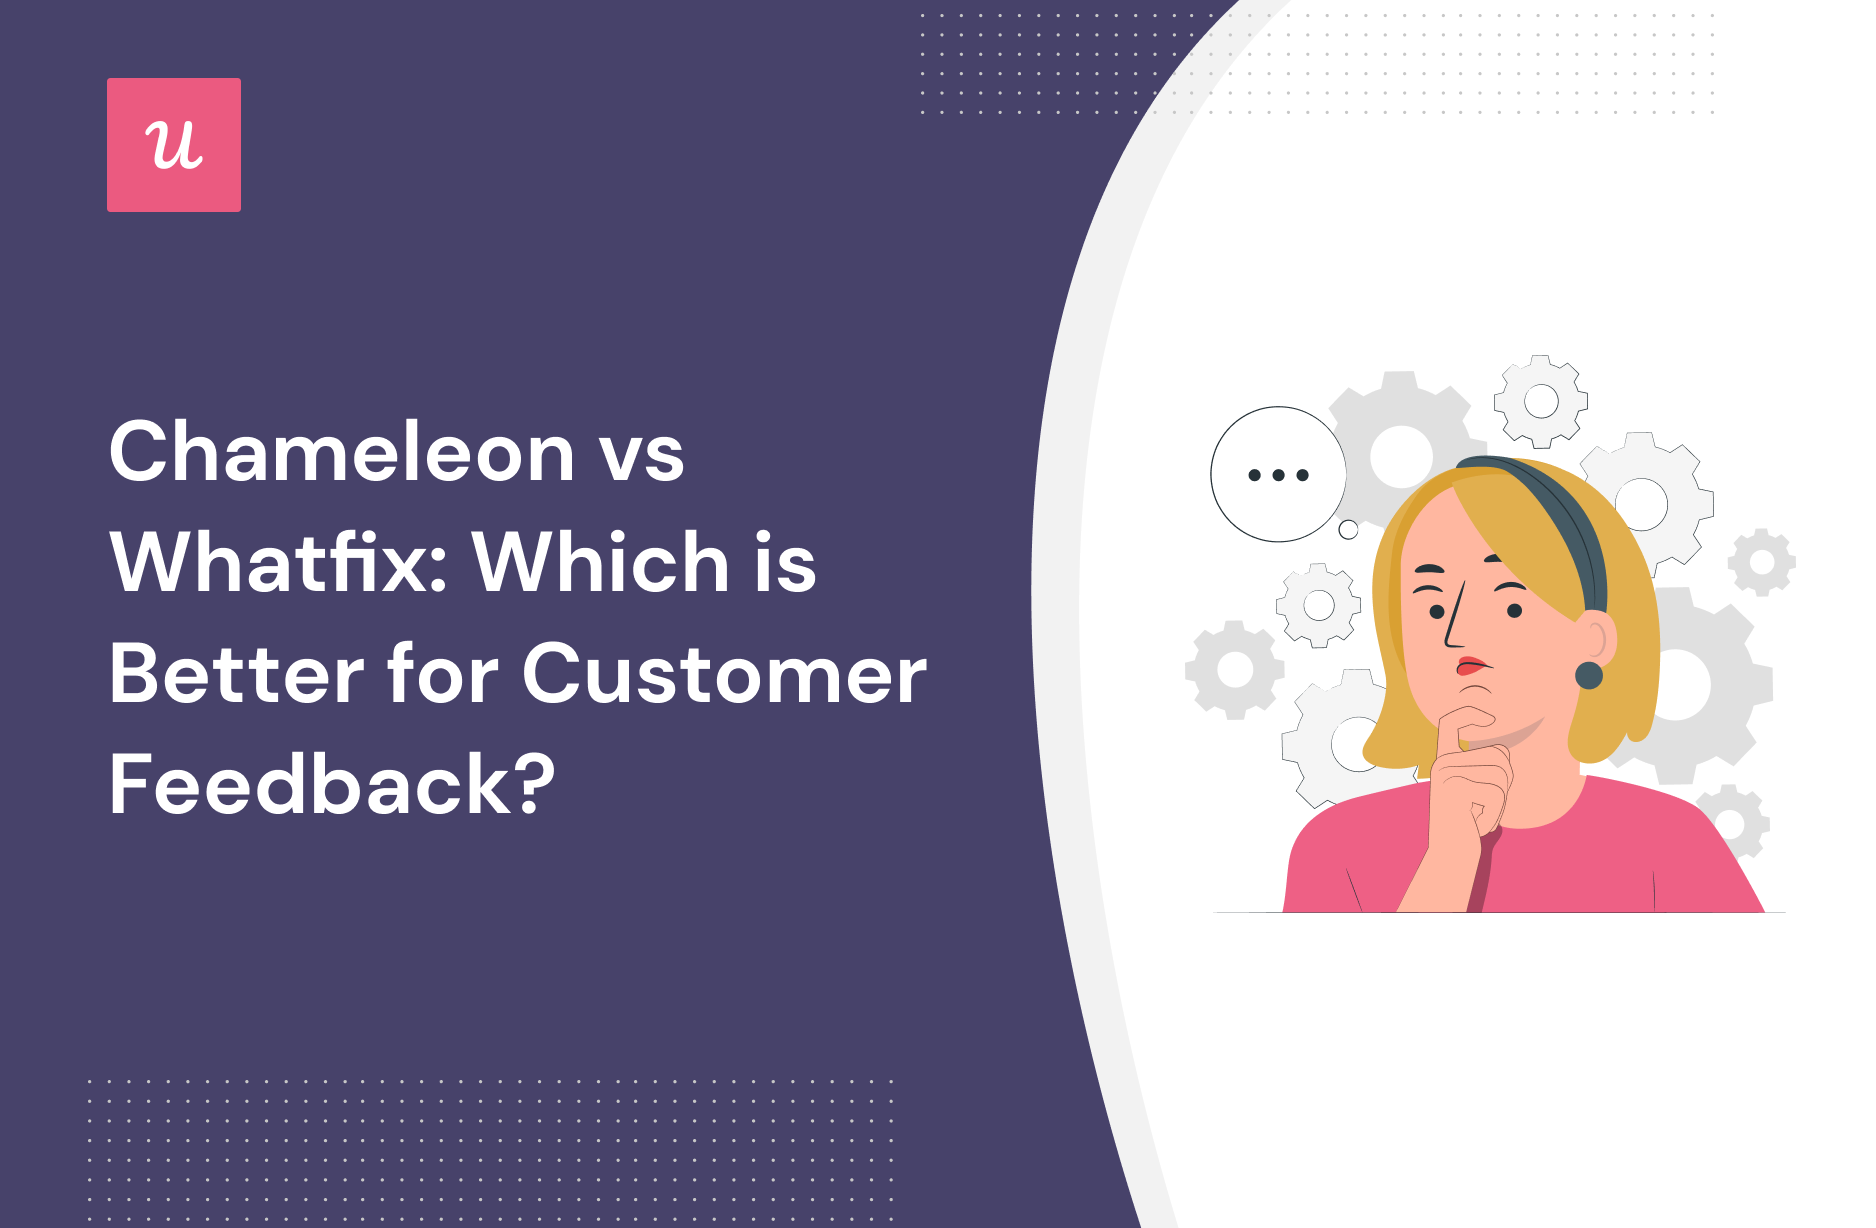 Chameleon vs Whatfix Which is Better for Customer Feedback